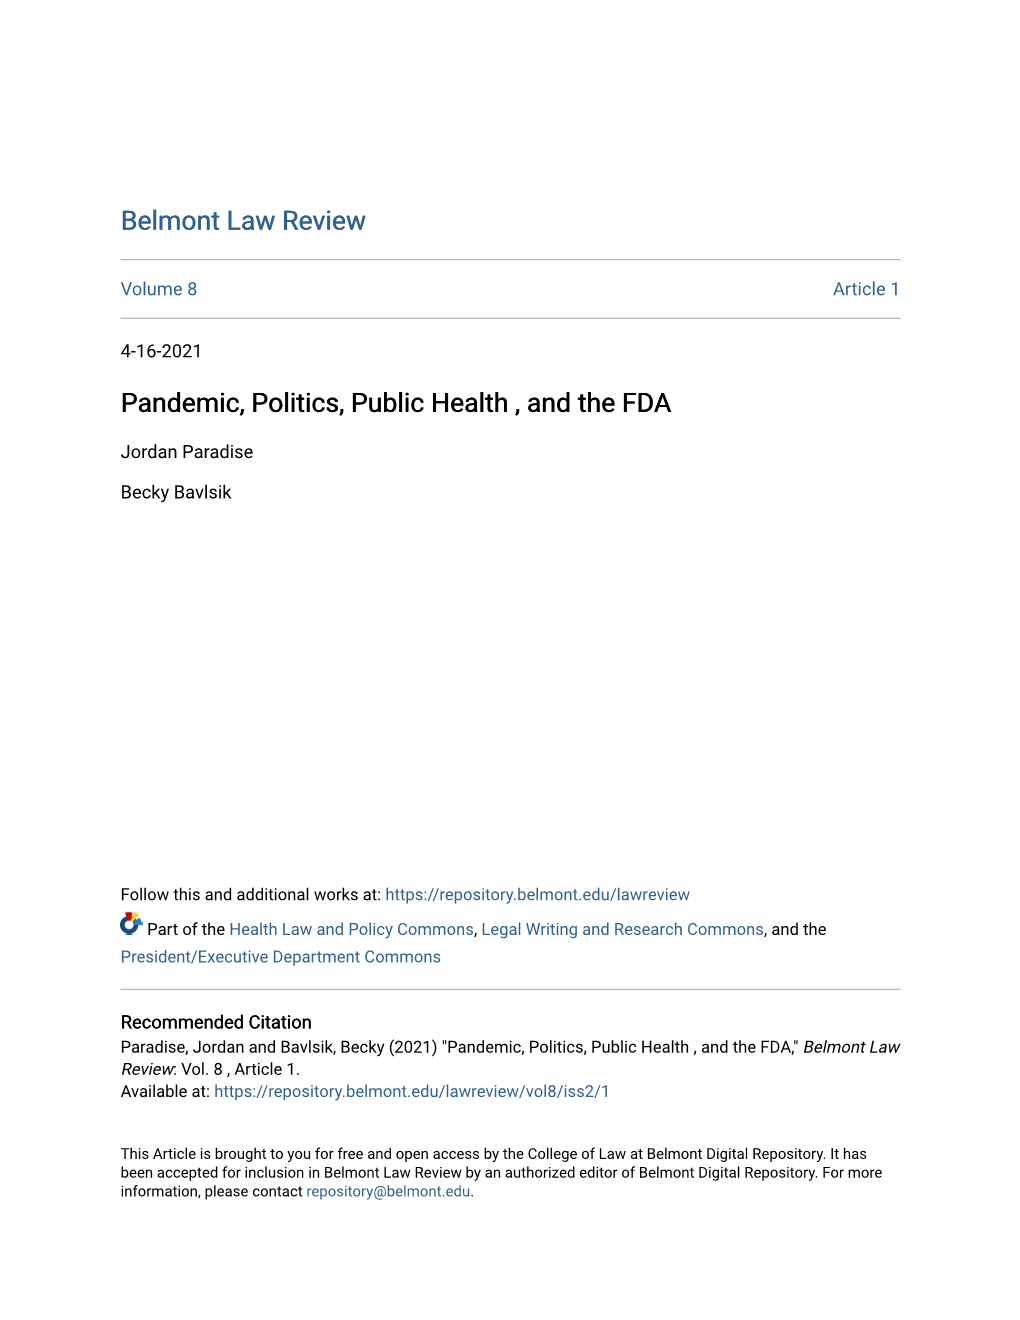 Pandemic, Politics, Public Health , and the FDA